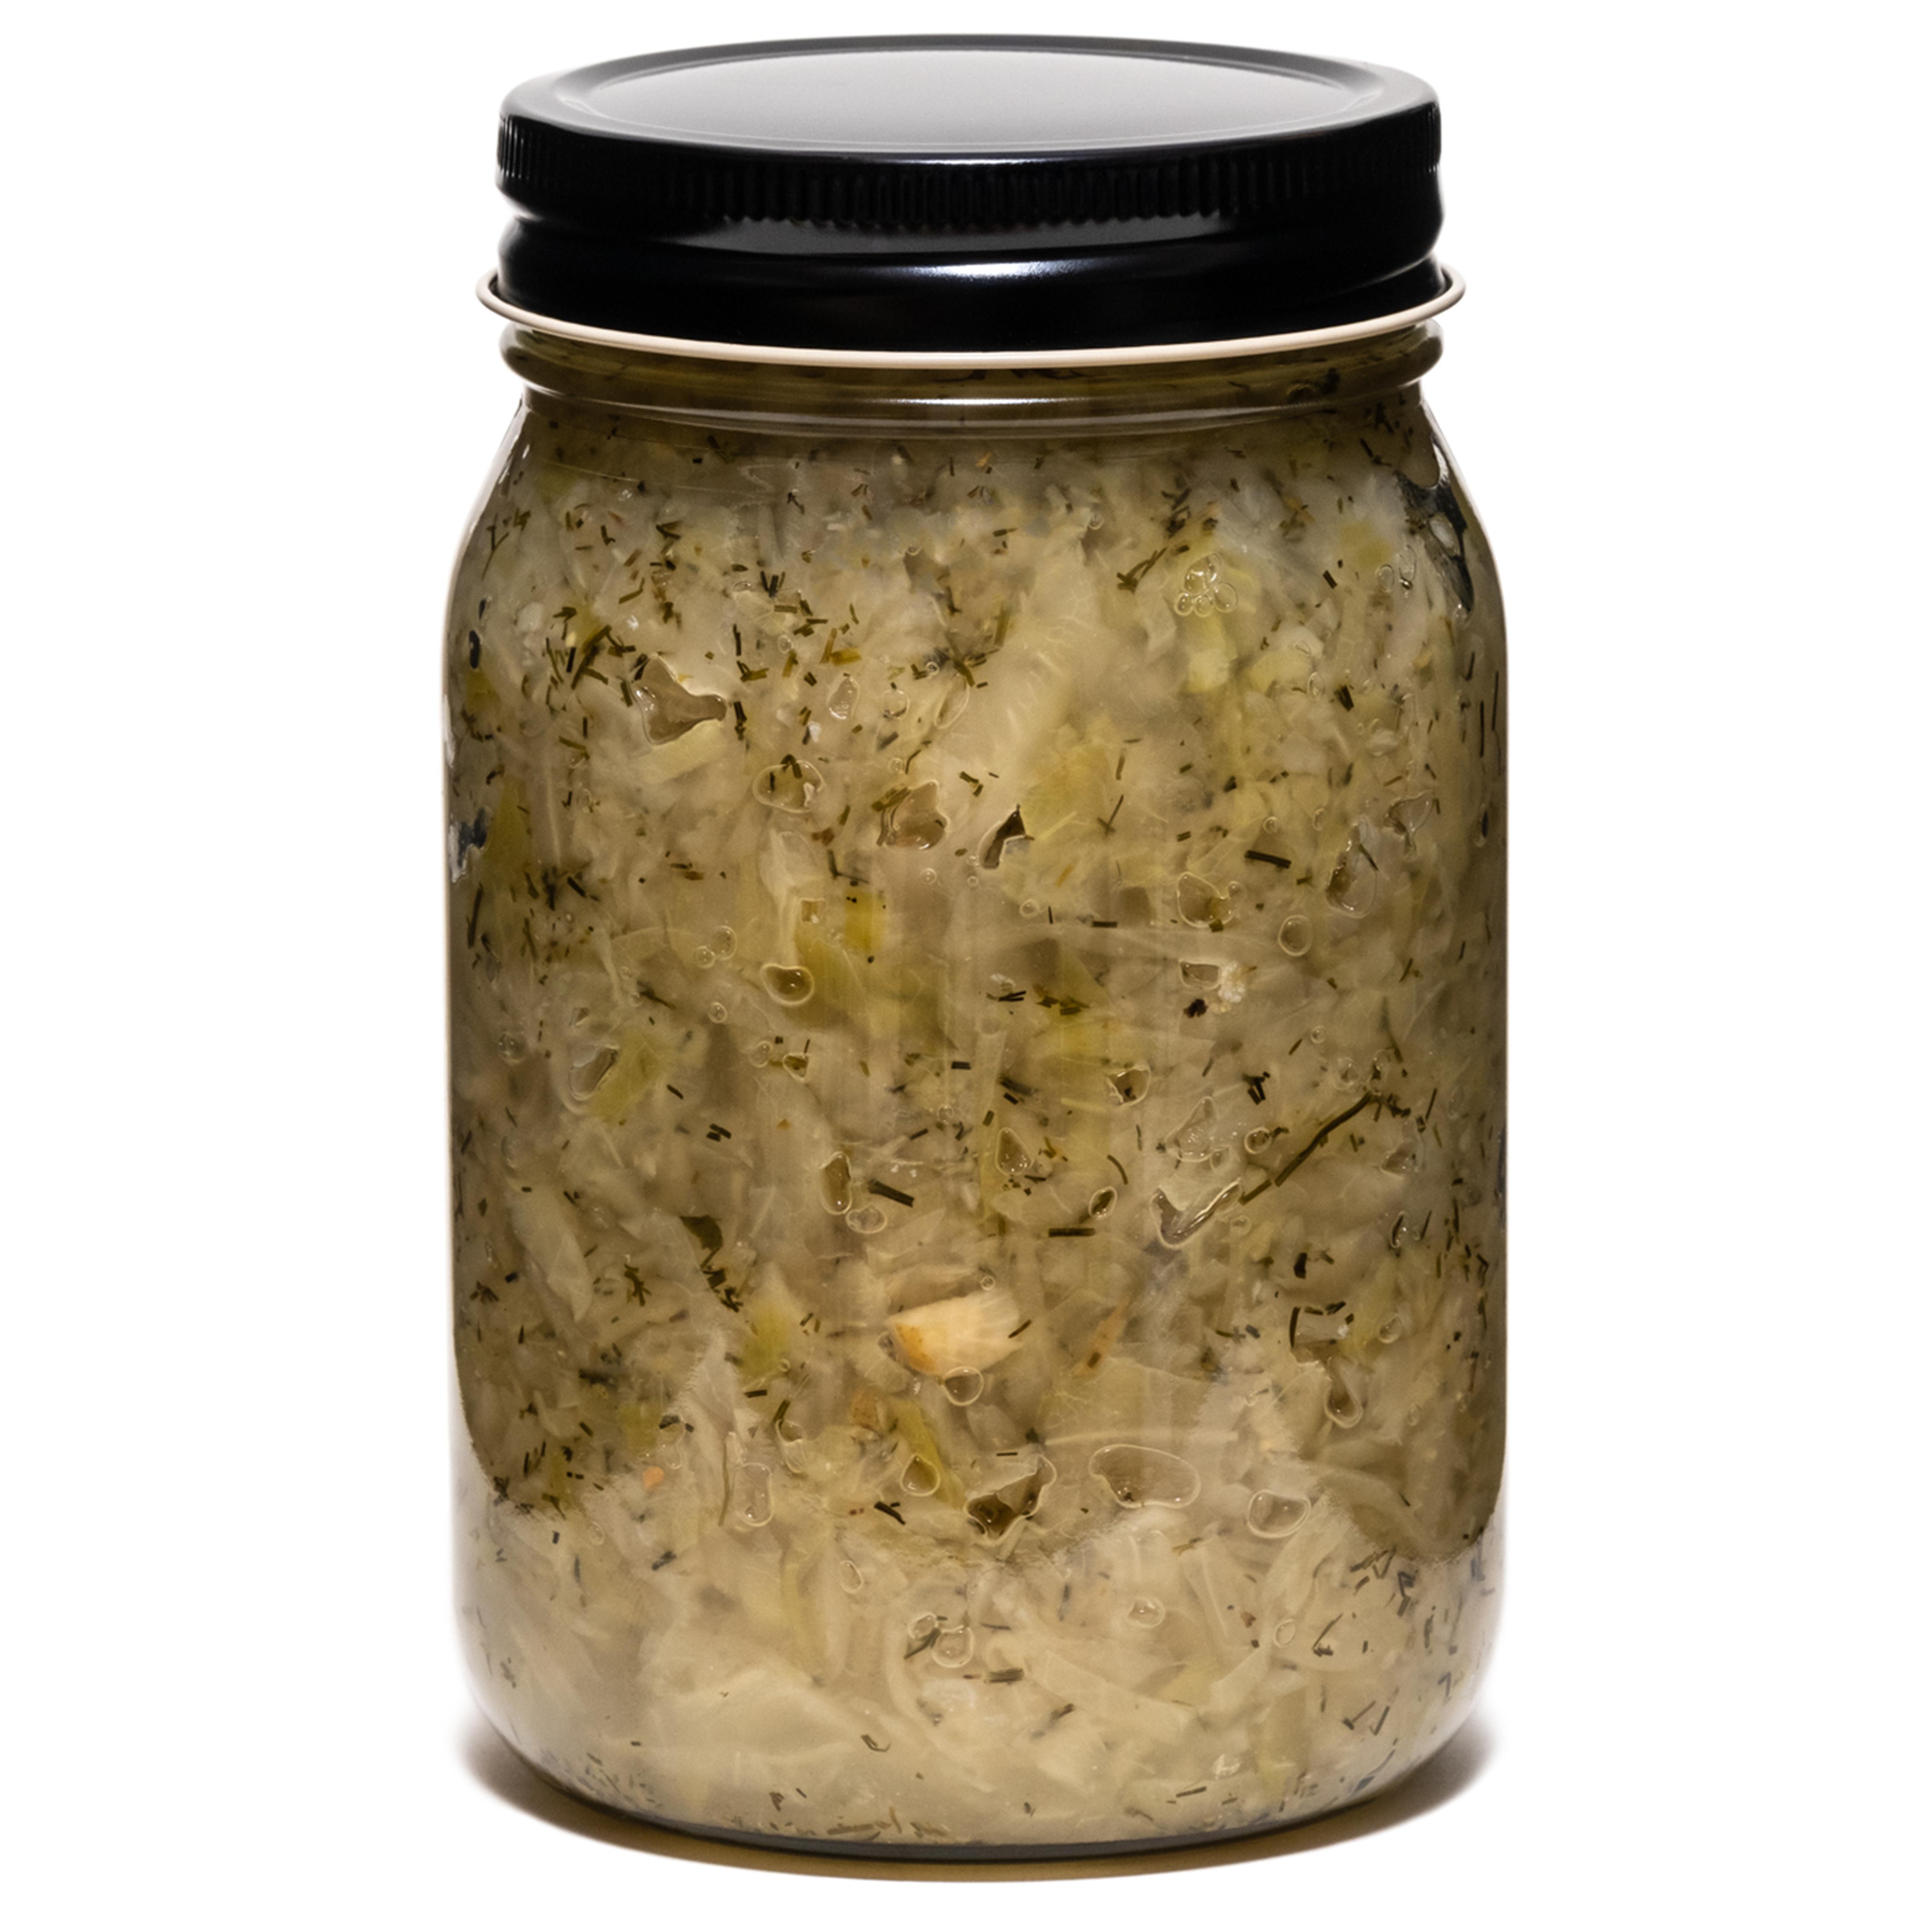 Organic lemon & dill sauerkraut - Consentida - Tout cru! Fermentation